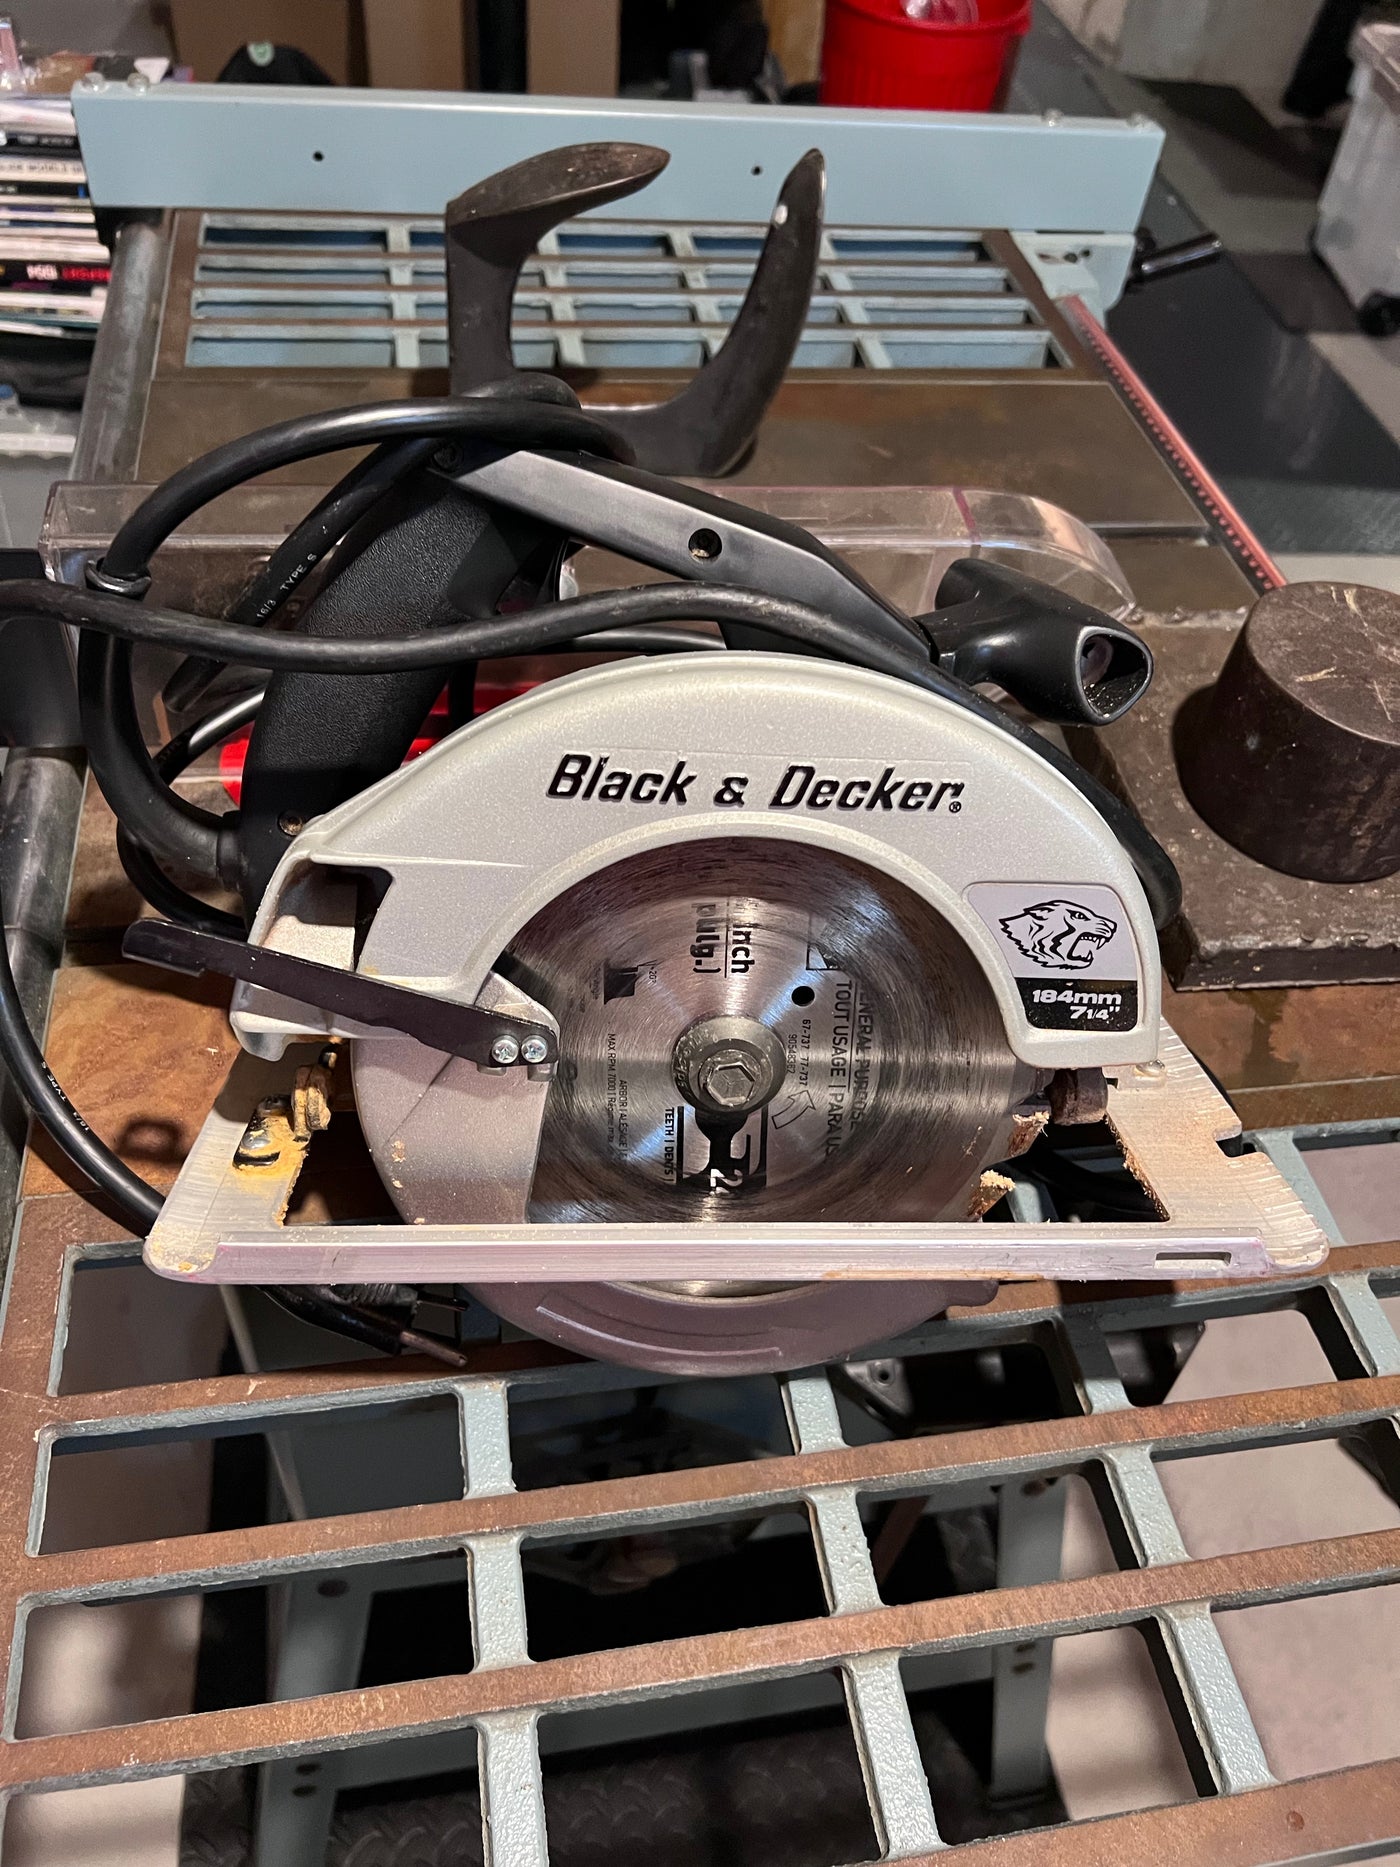 Black and Decker Circular Saw (13 Amp Corded Model) 